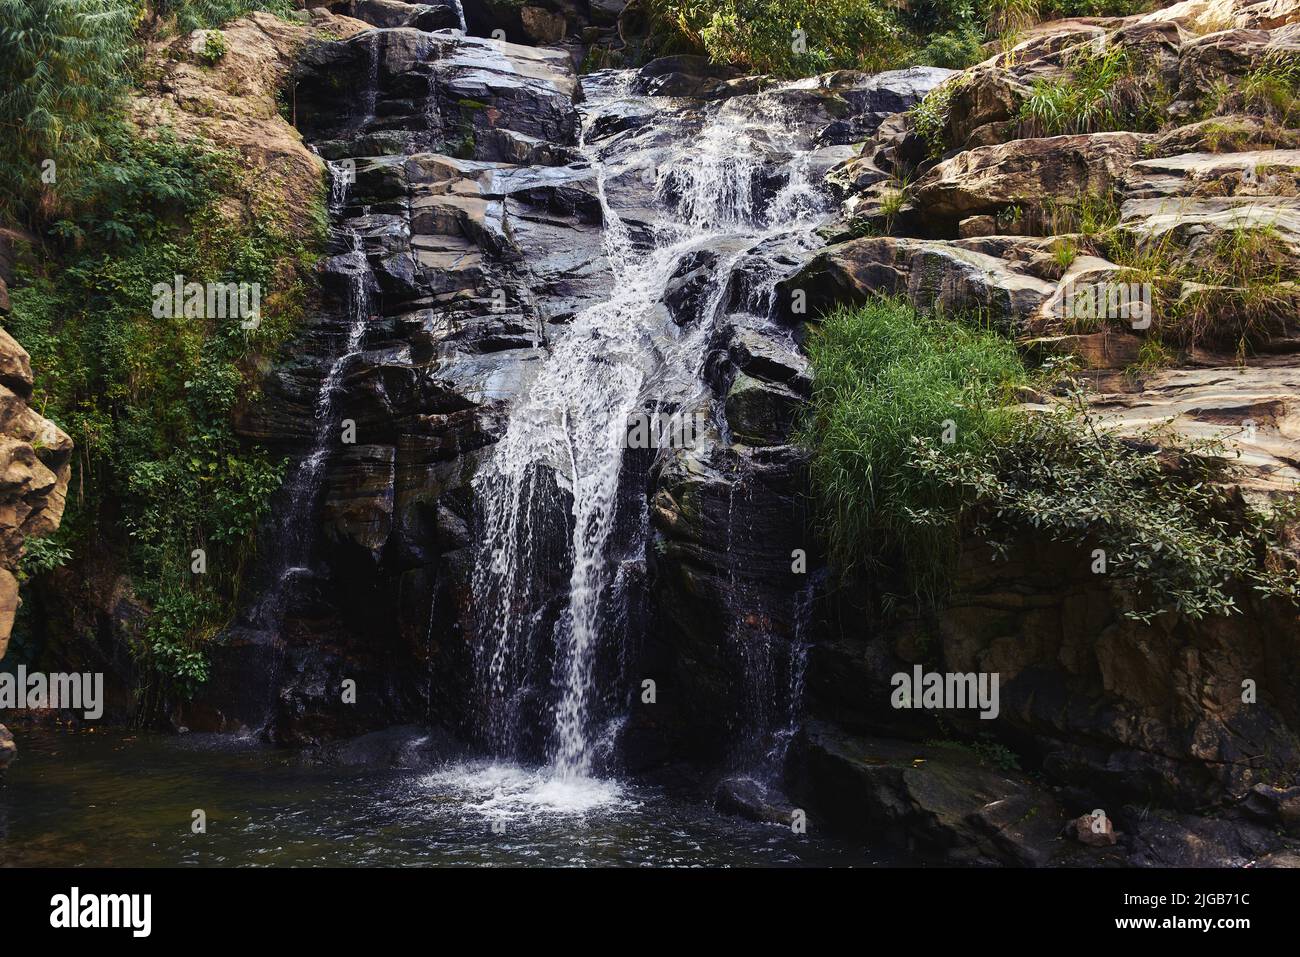 The Ravana Falls  is a popular sightseeing attraction in Sri Lanka. Stock Photo